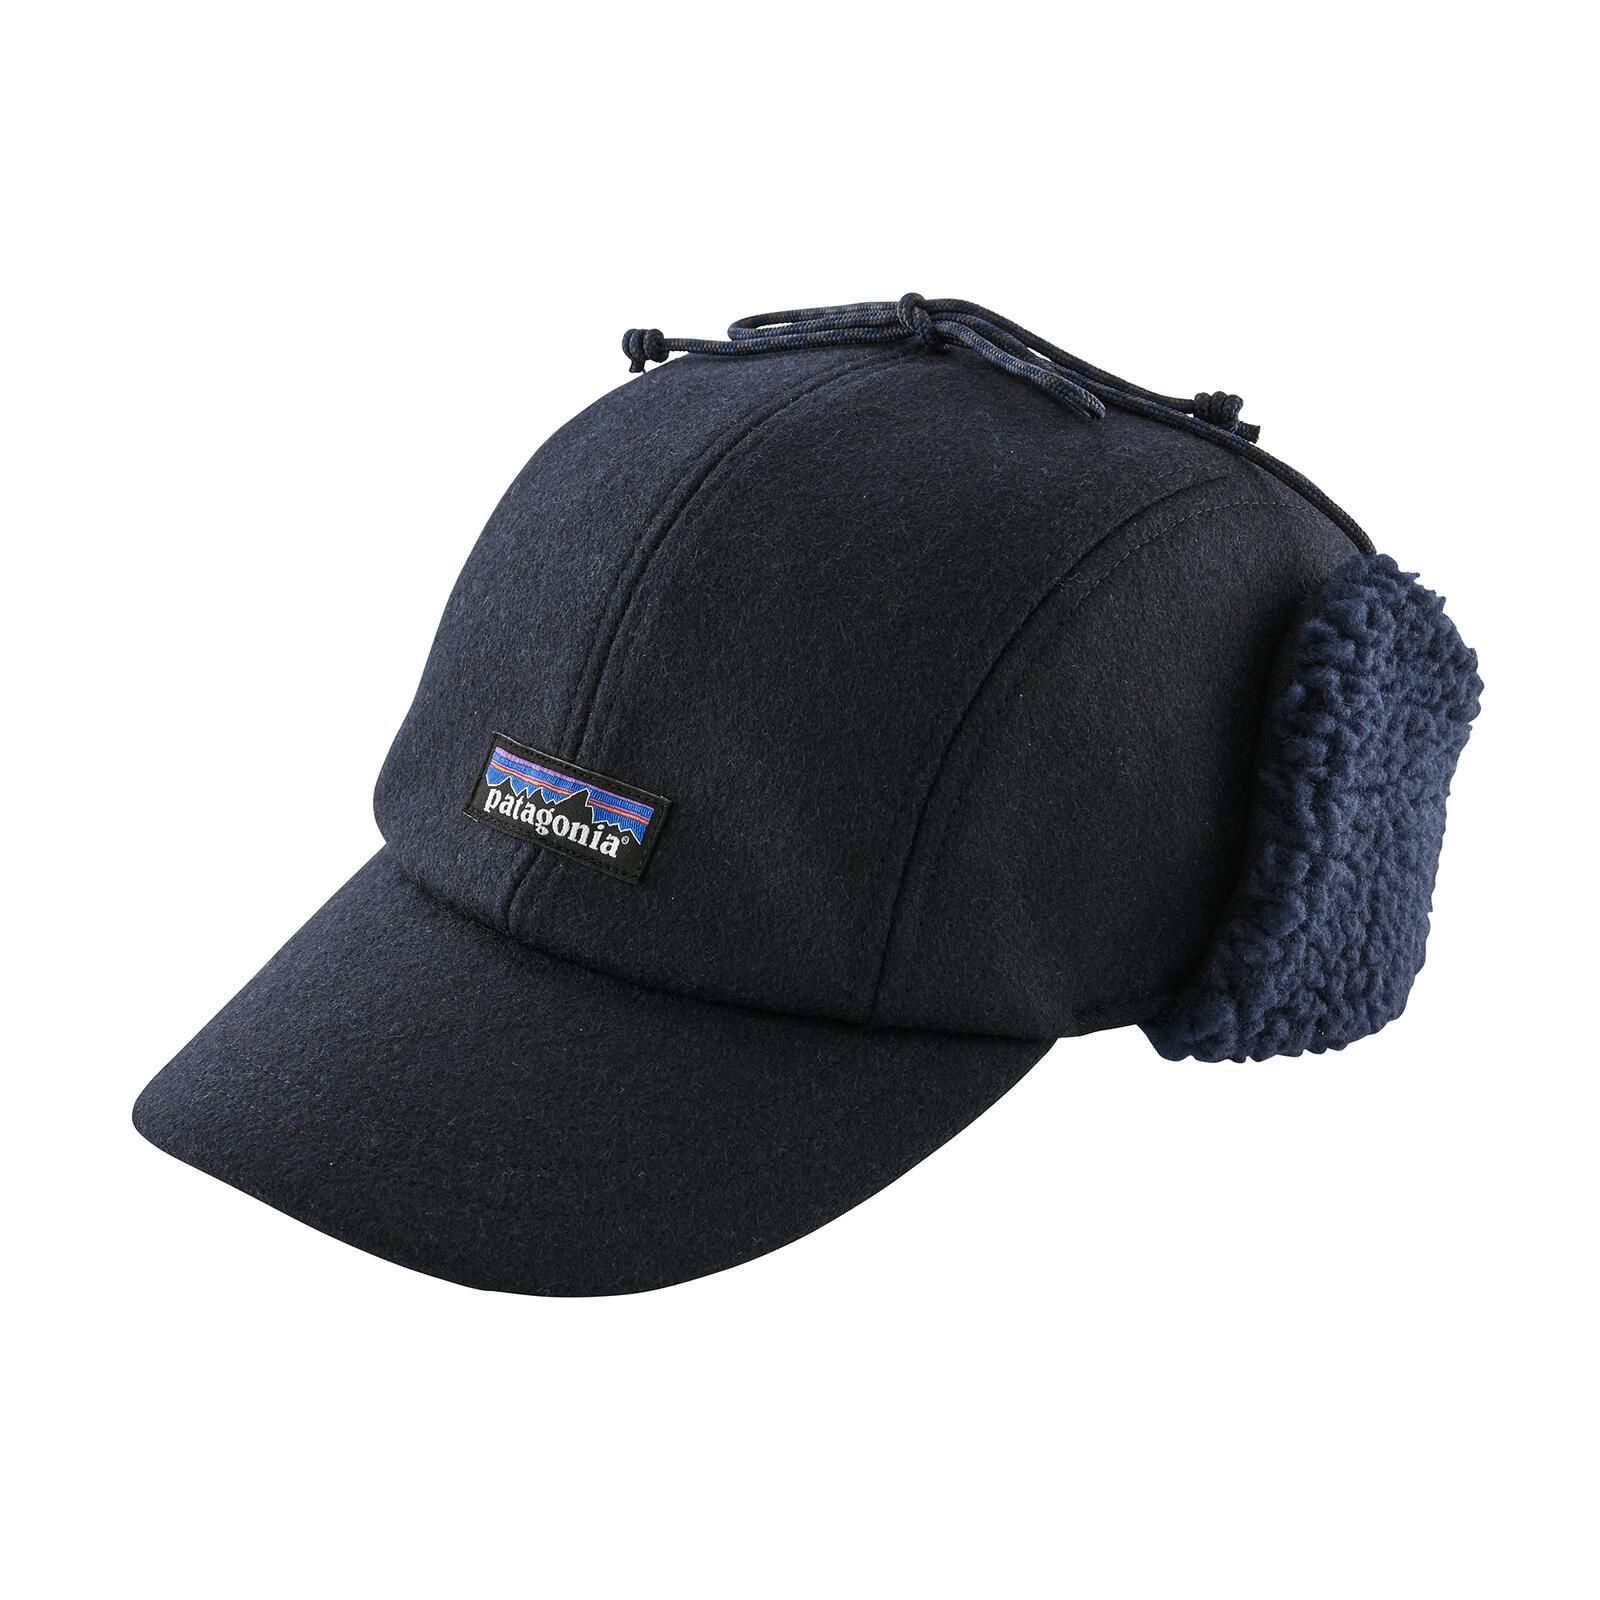 Zuzuzj Crown Royal Fashion Stretchy Knit Cap Hedging Cap Casual Cap Cotton Cap for Men Women Beanie Hat Warm Hat Black 2 